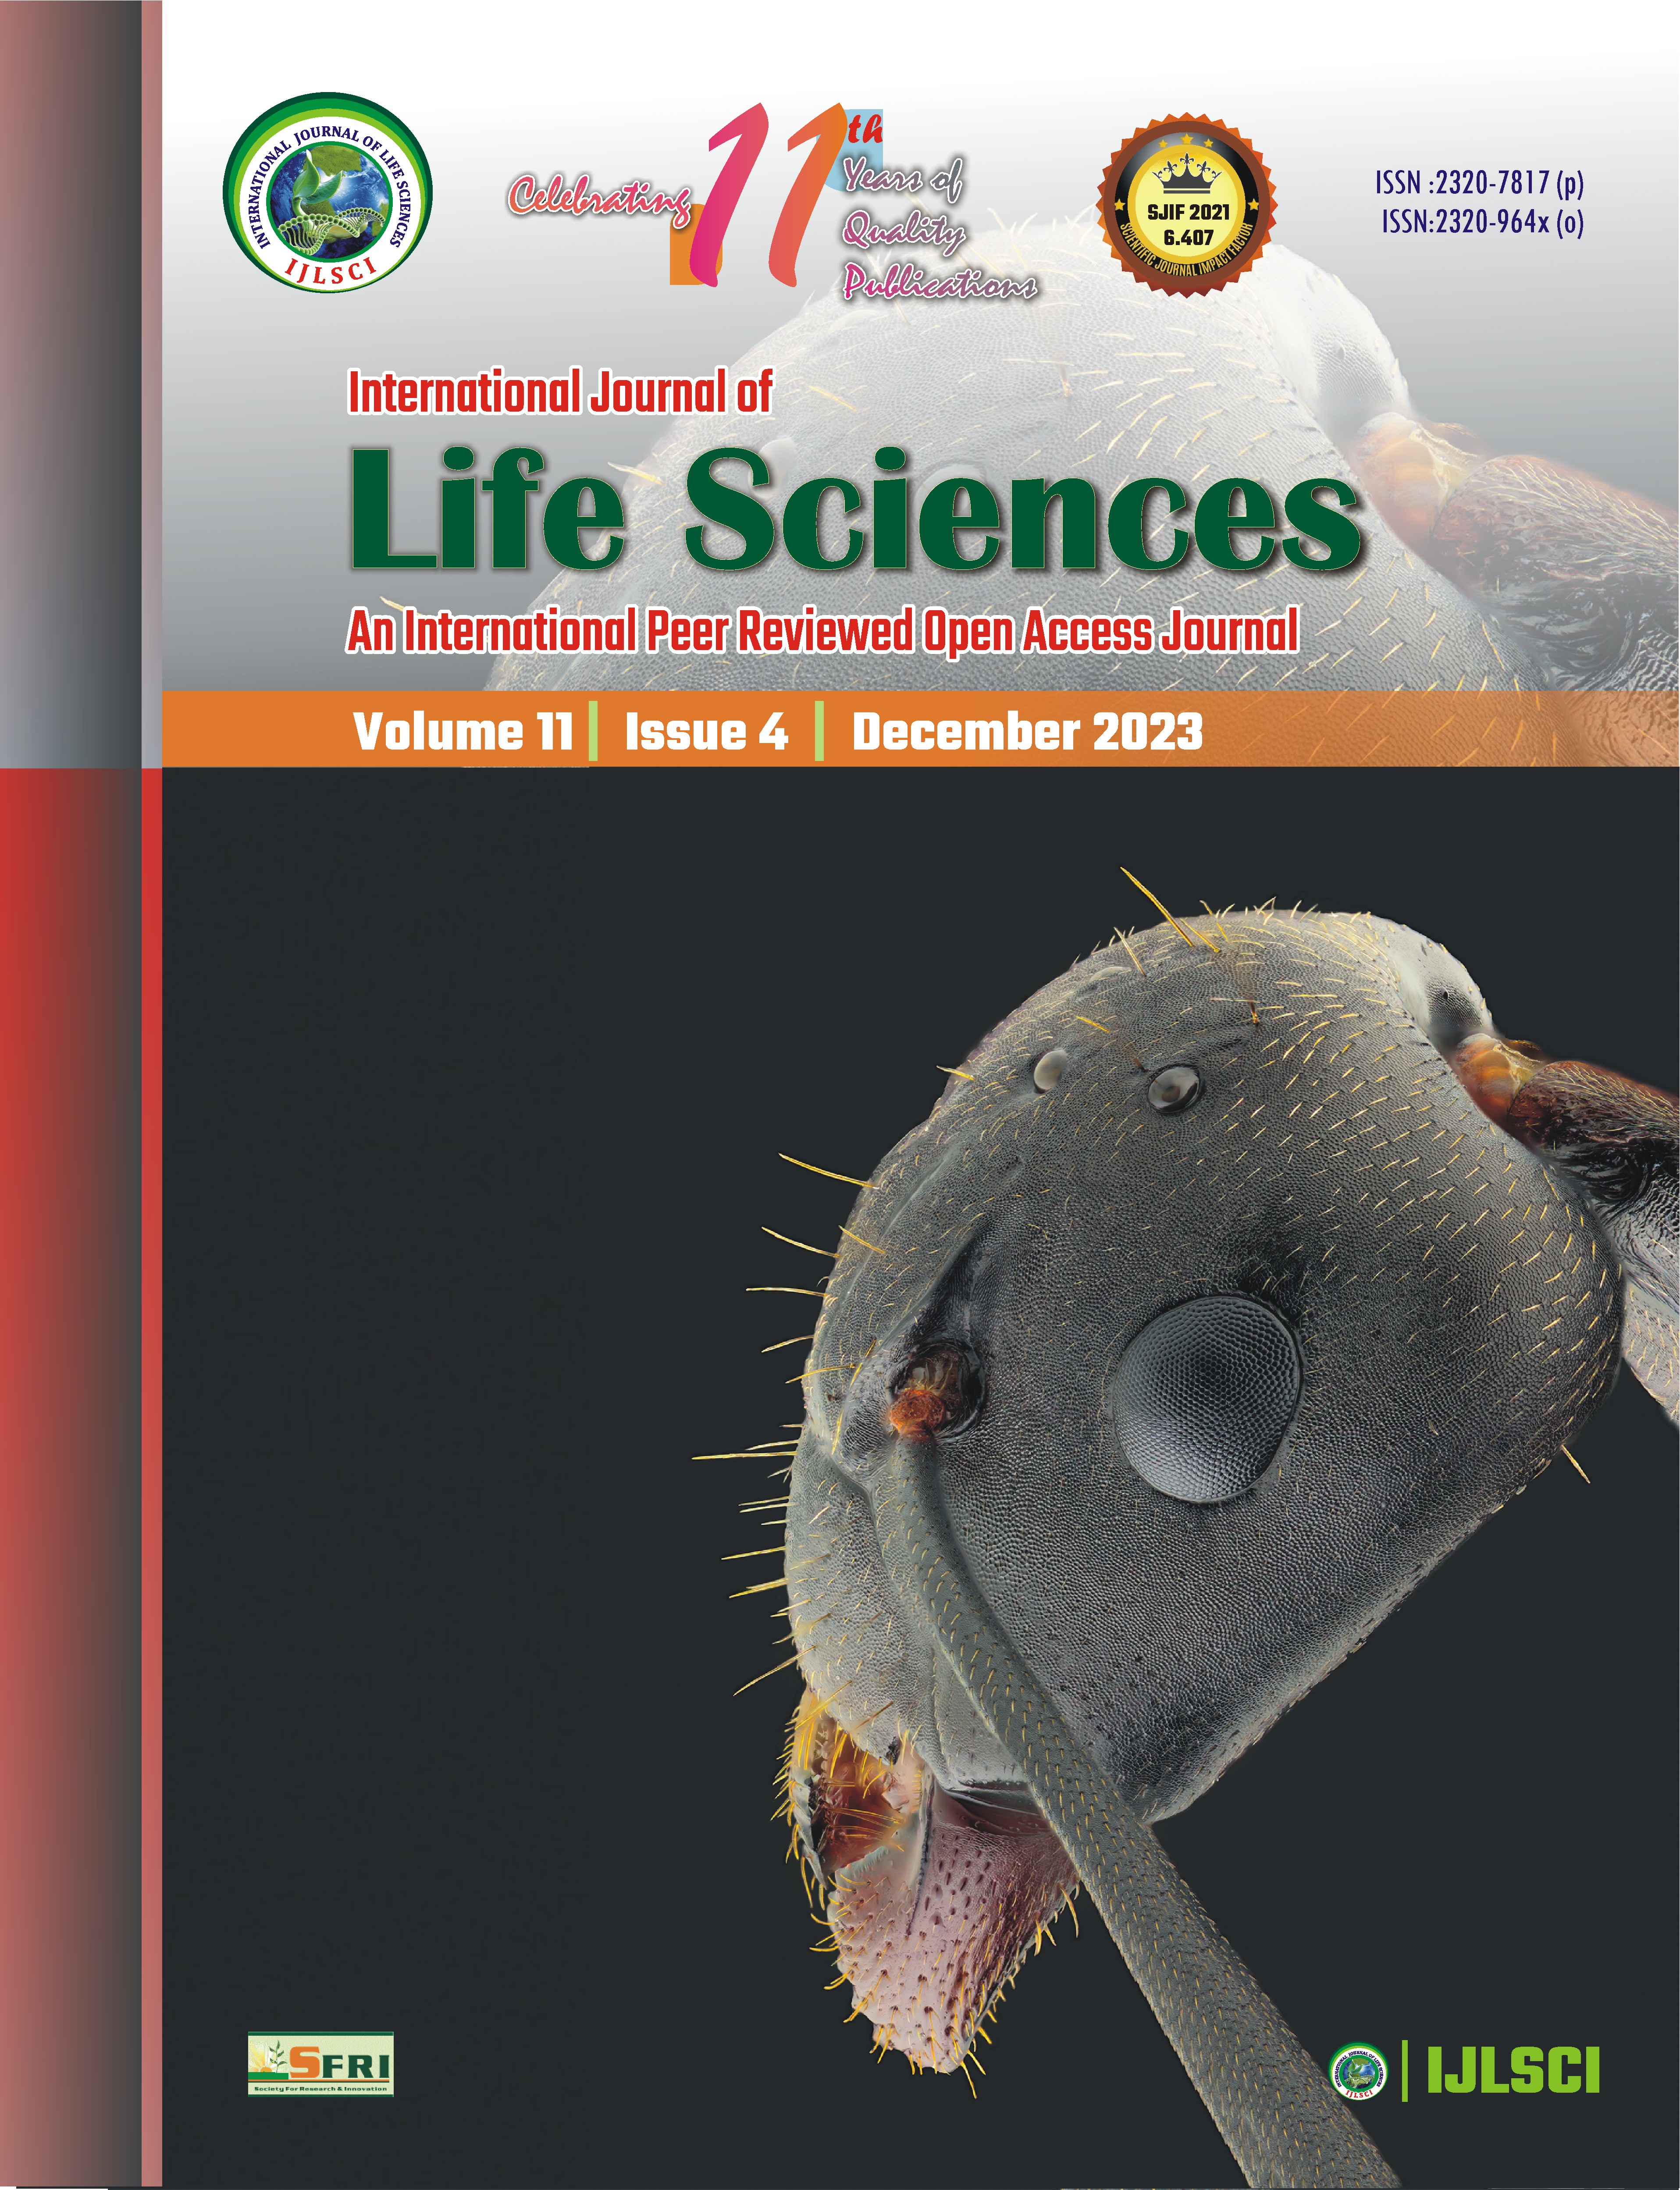                     View Vol. 11 No. 4 (2023): International Journal of Life Sciences
                